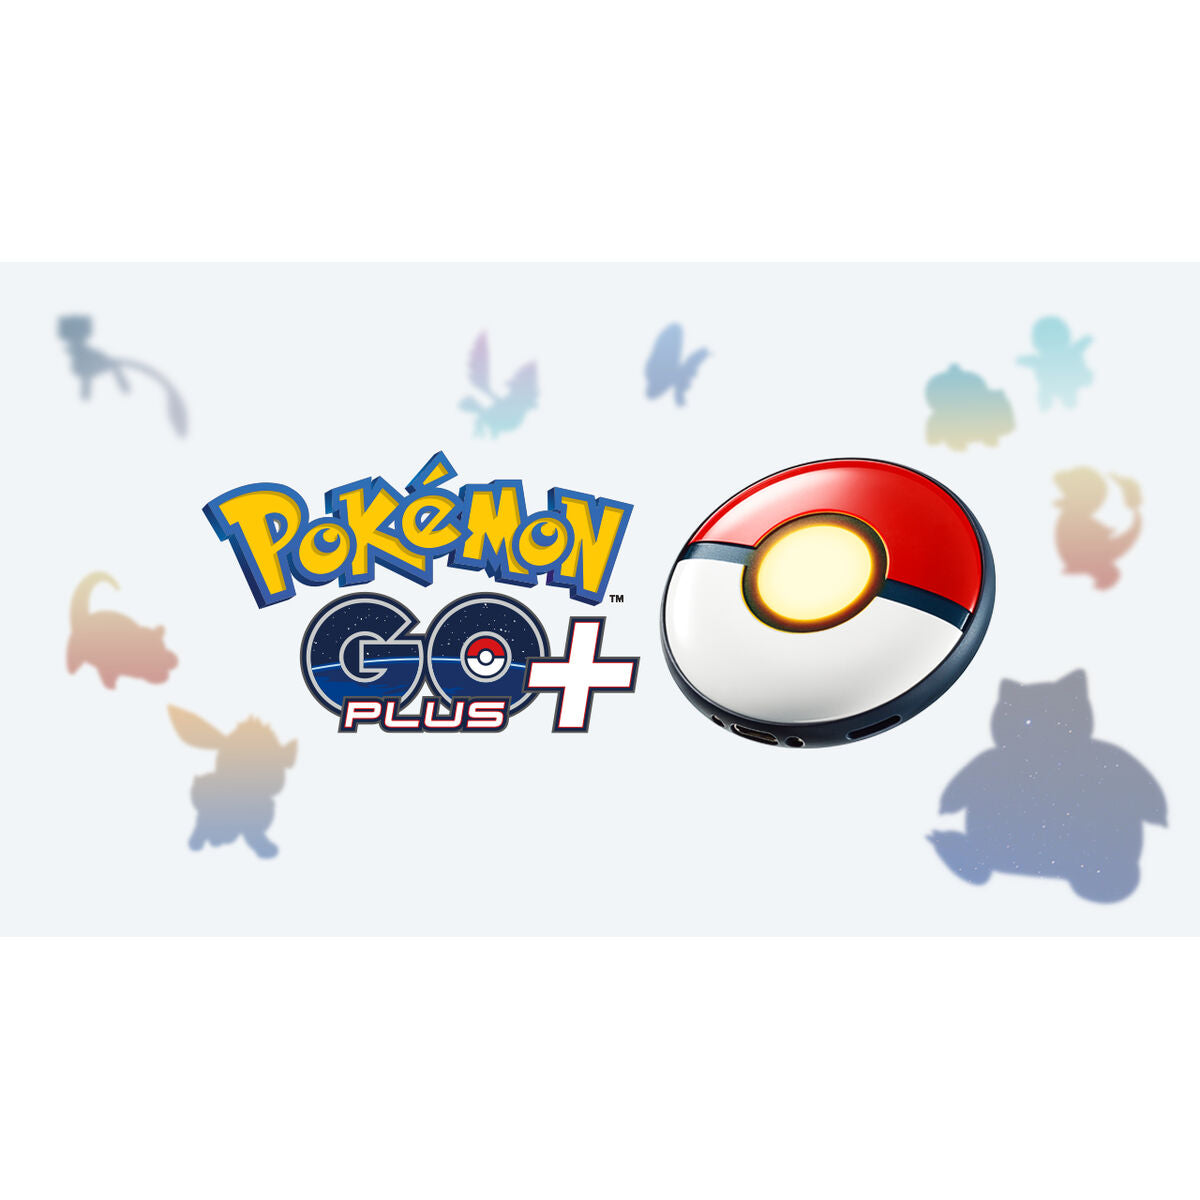 Accessoire Pokémon Go Plus+ Smartphone - Pokémon - Jardin D'Eyden - jardindeyden.fr